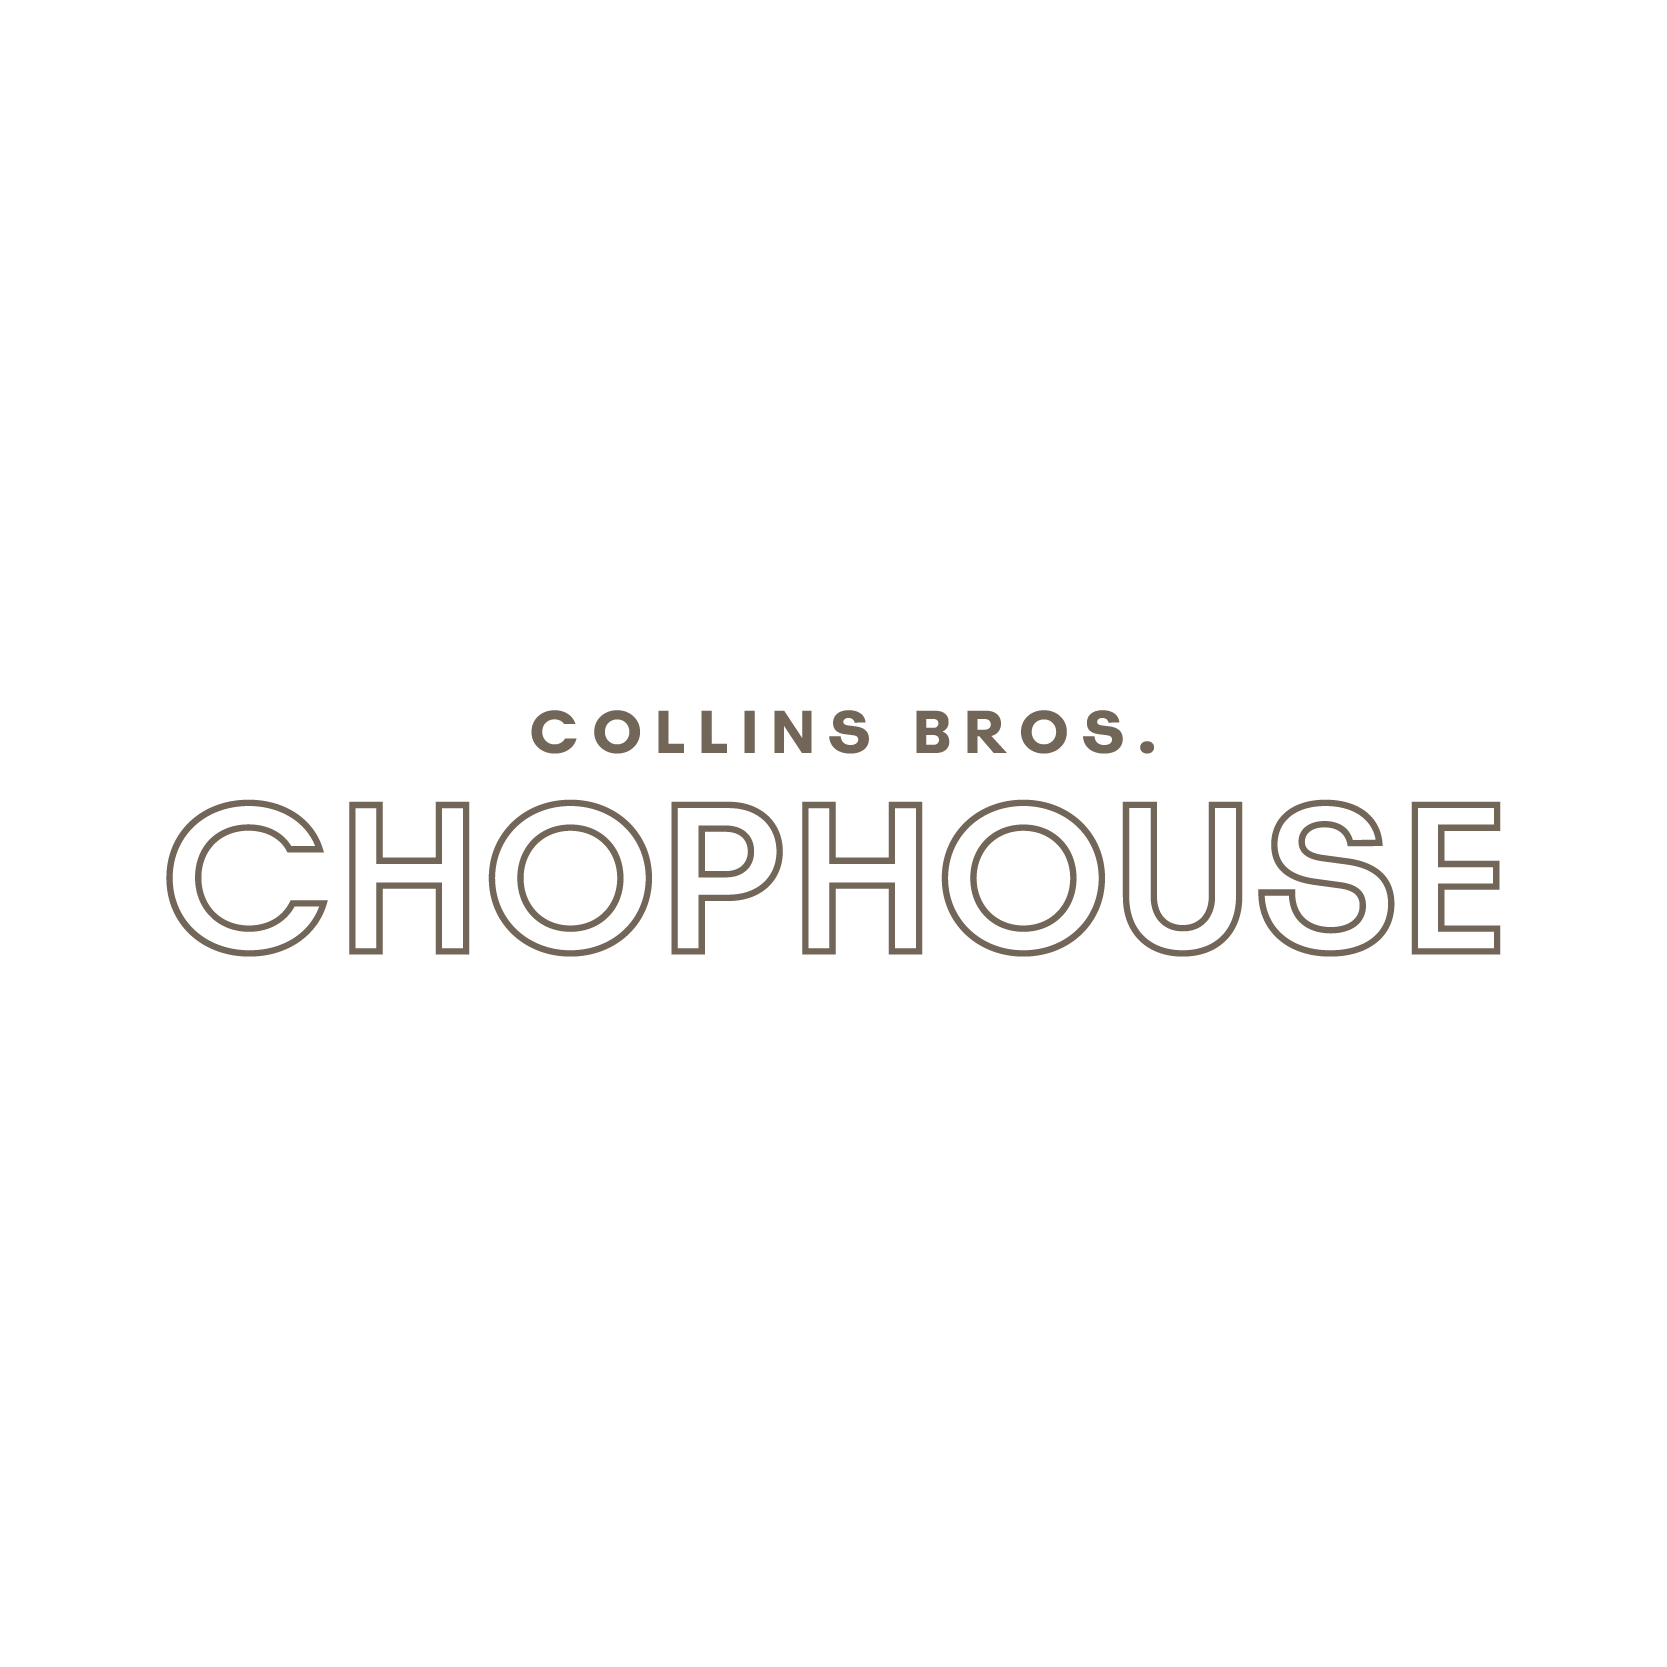 Common Ground Restaurant Logo - Chophouse.png